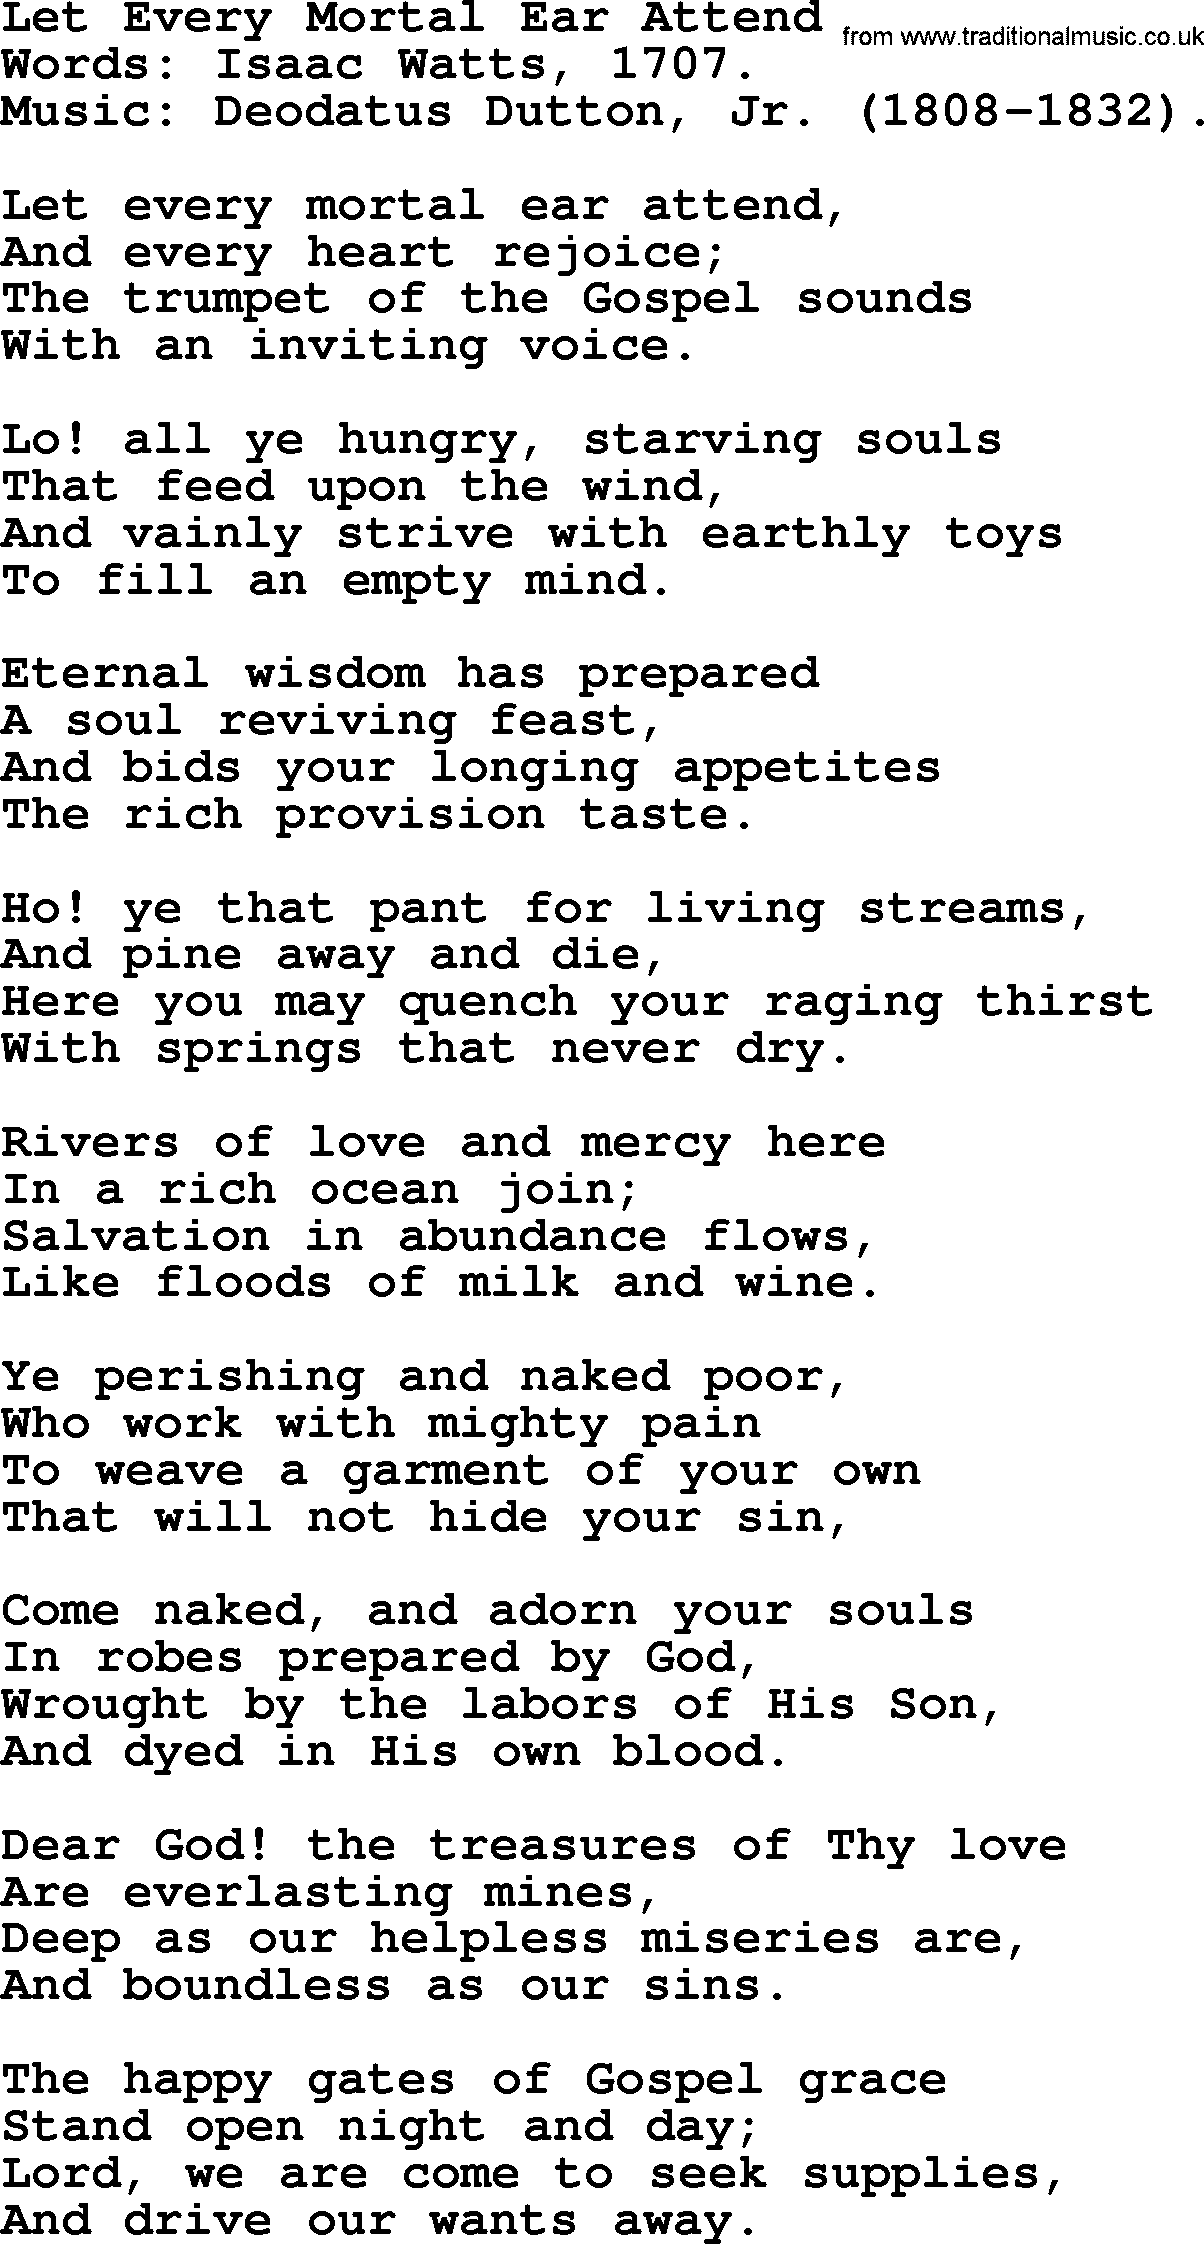 Isaac Watts Christian hymn: Let Every Mortal Ear Attend- lyricss